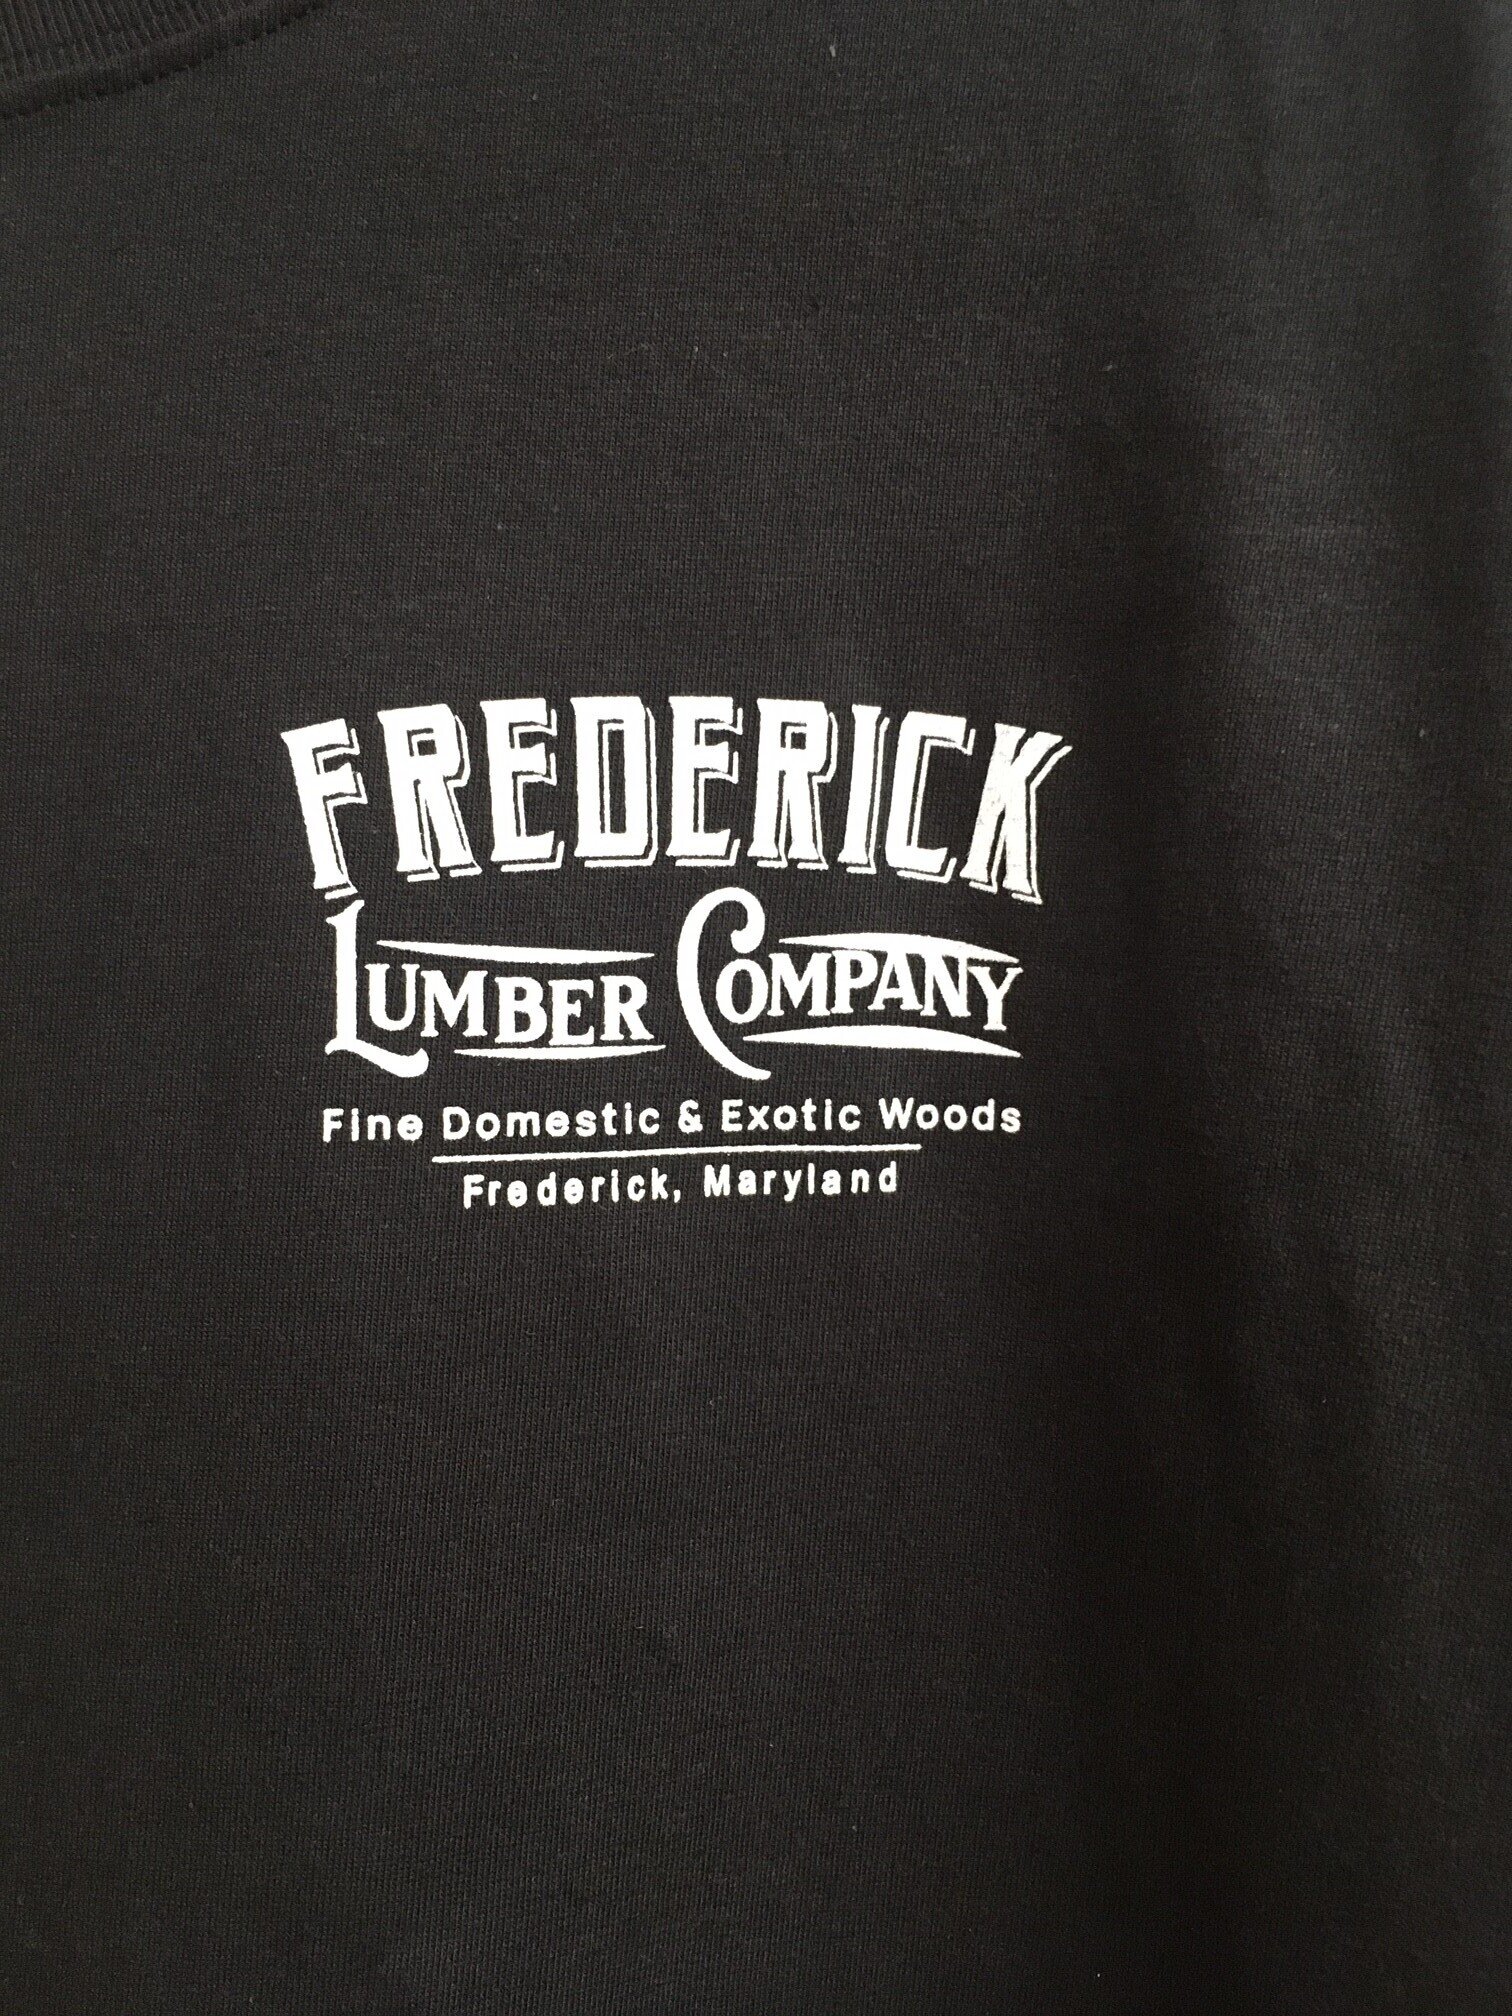 Store 1 — Frederick Lumber Company